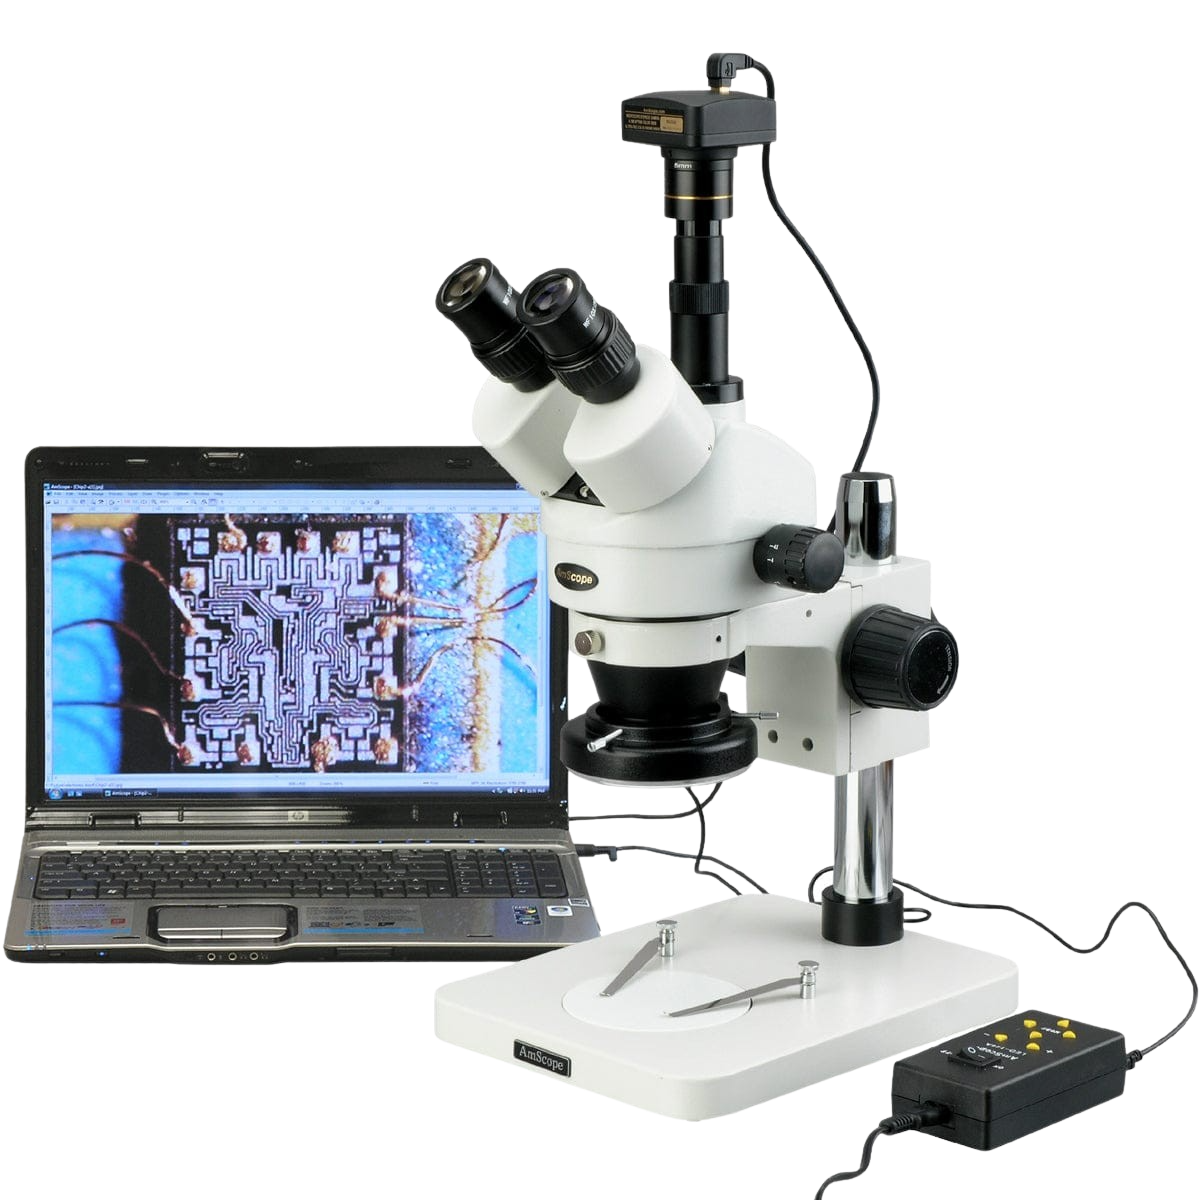 AmScope, Amscope SM-1TSZ-144A-5M 3.5X - 90X Digital Zoom Stereo Microscope with 4 Zone 144 LED Light Plus 5MP USB Camera New